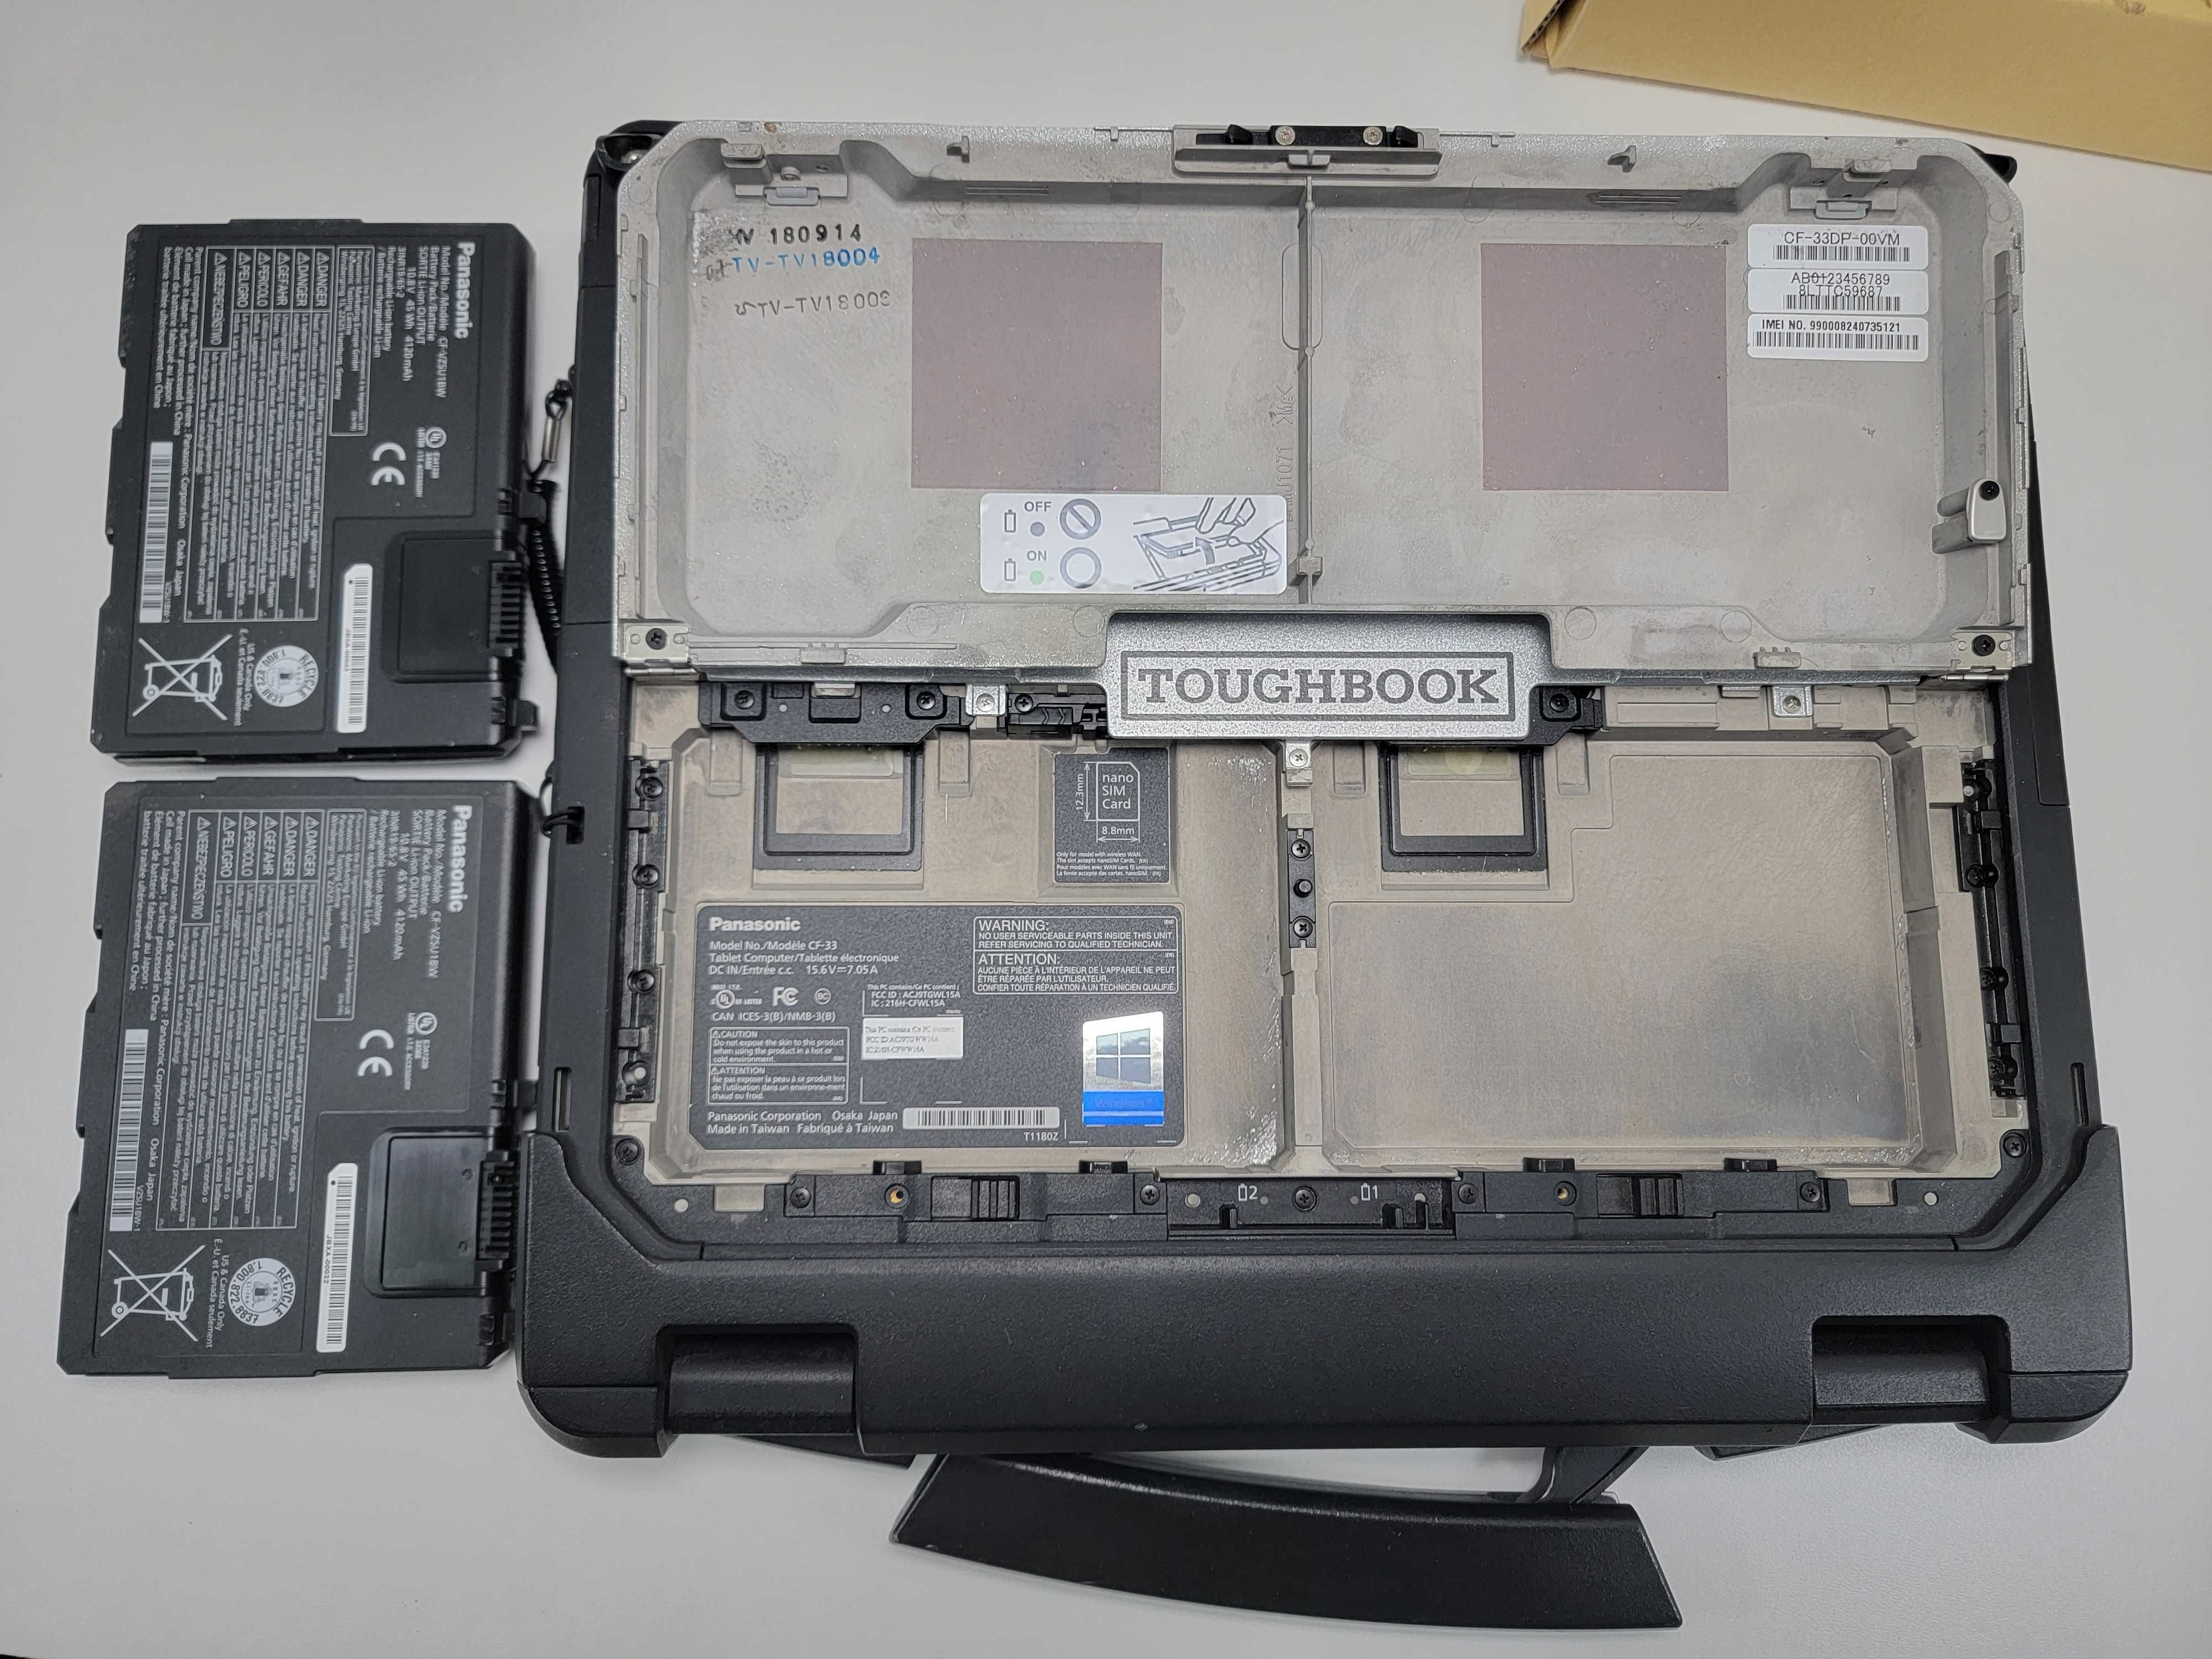 Panasonic Toughbook CF-33 12" захищений ноутбук i5 16GB 256SSD GPS 4G